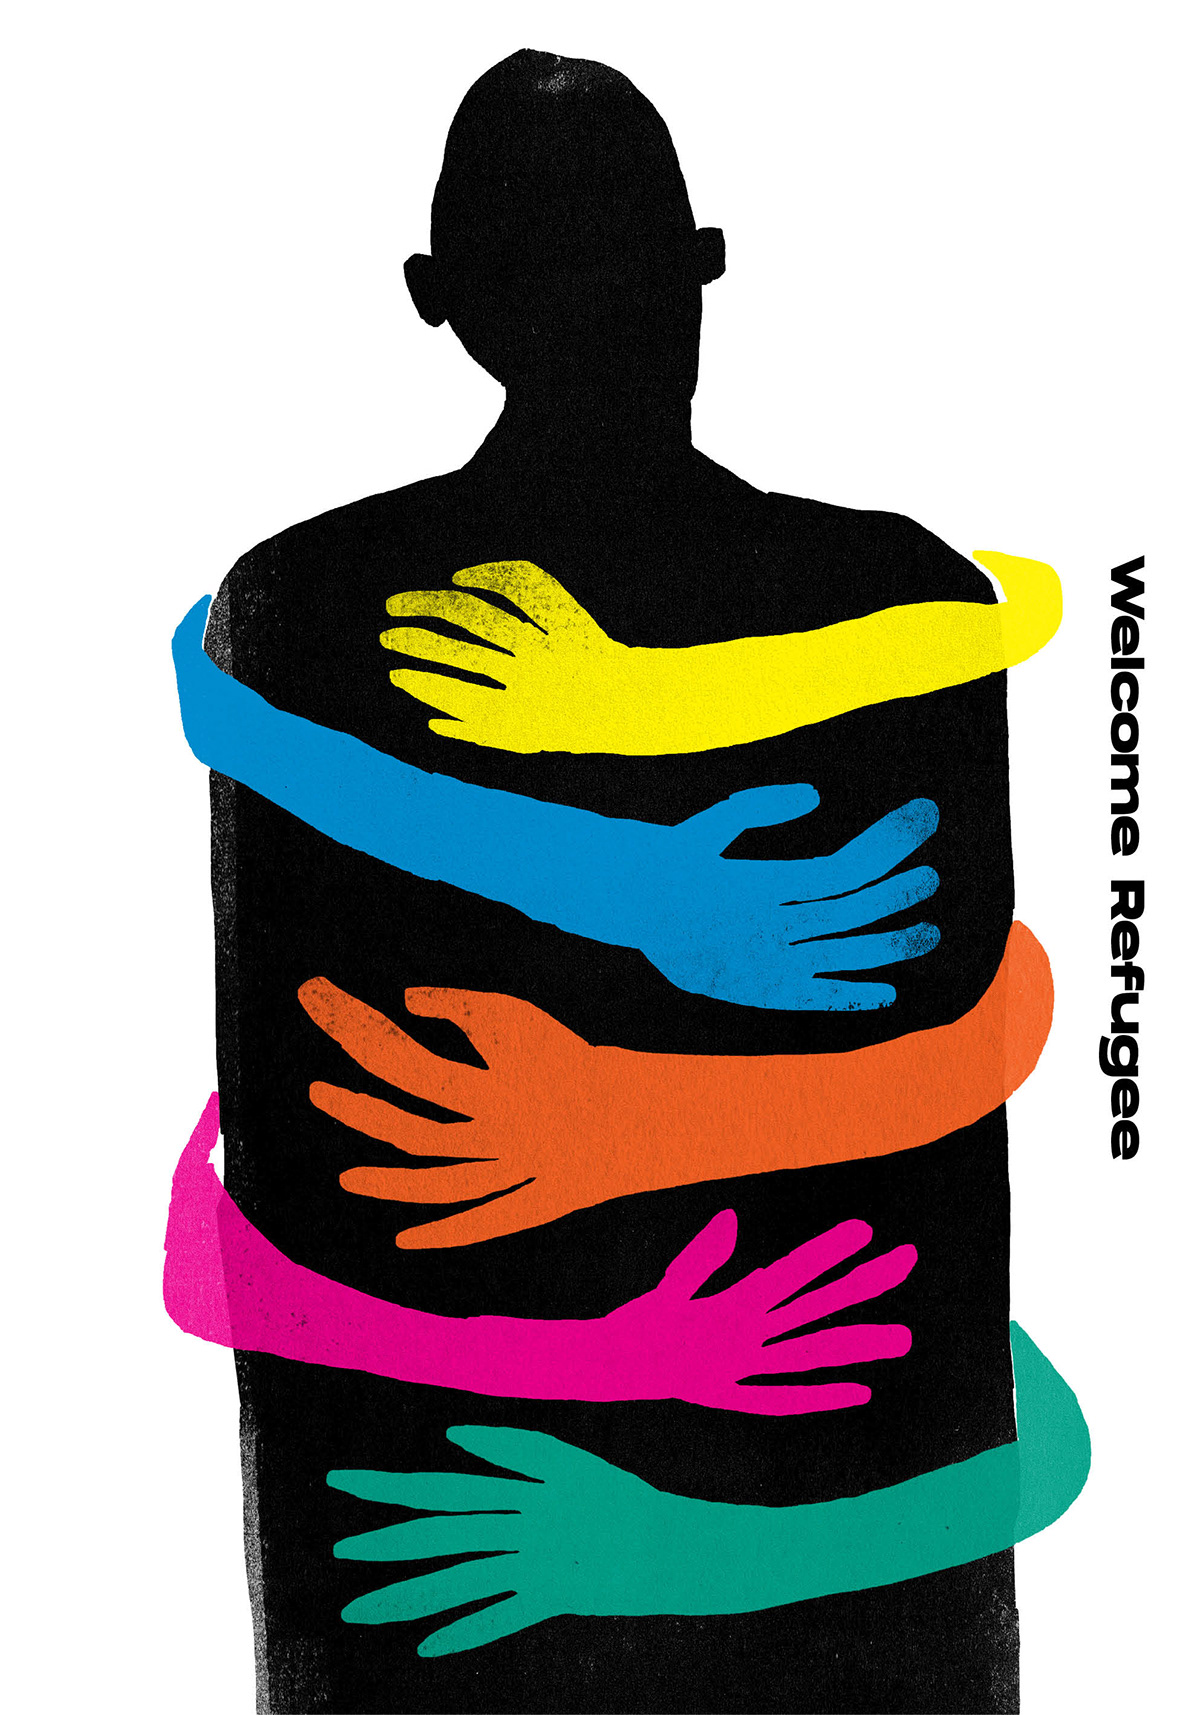 poster social blockprint handmade linocut Montreal politic activist affiche